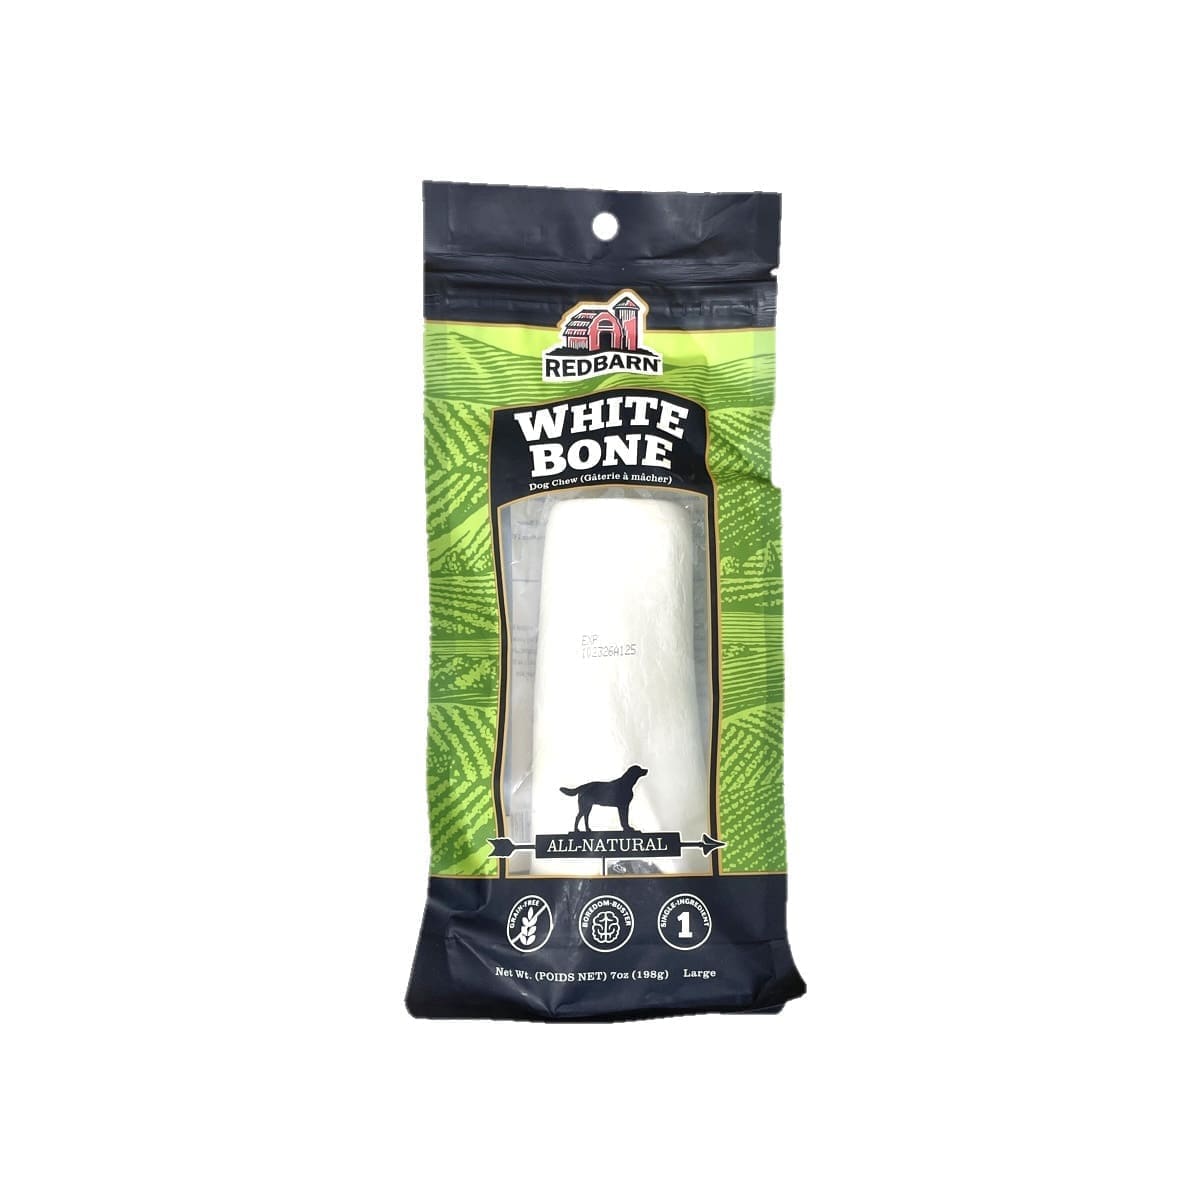 Redbarn White Bone Dog Chew (198g)